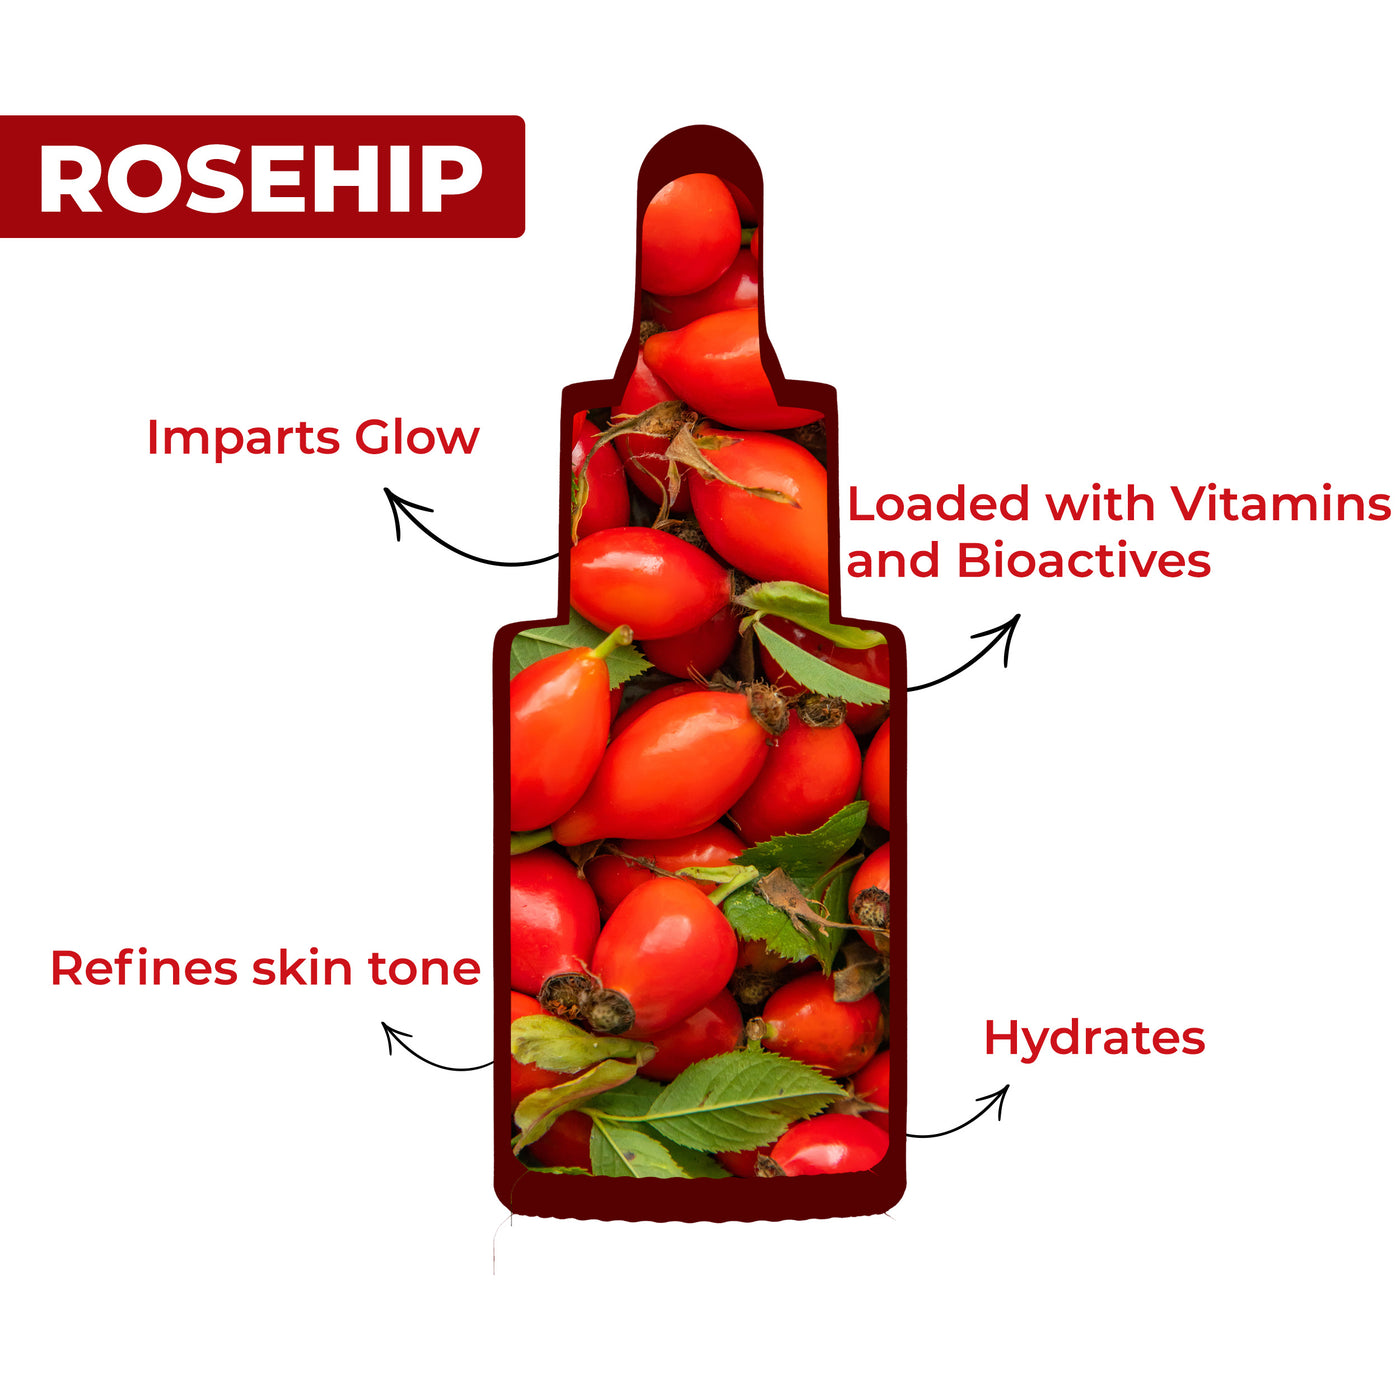 Rosehip Hydrating Glow Face Serum - 30ml